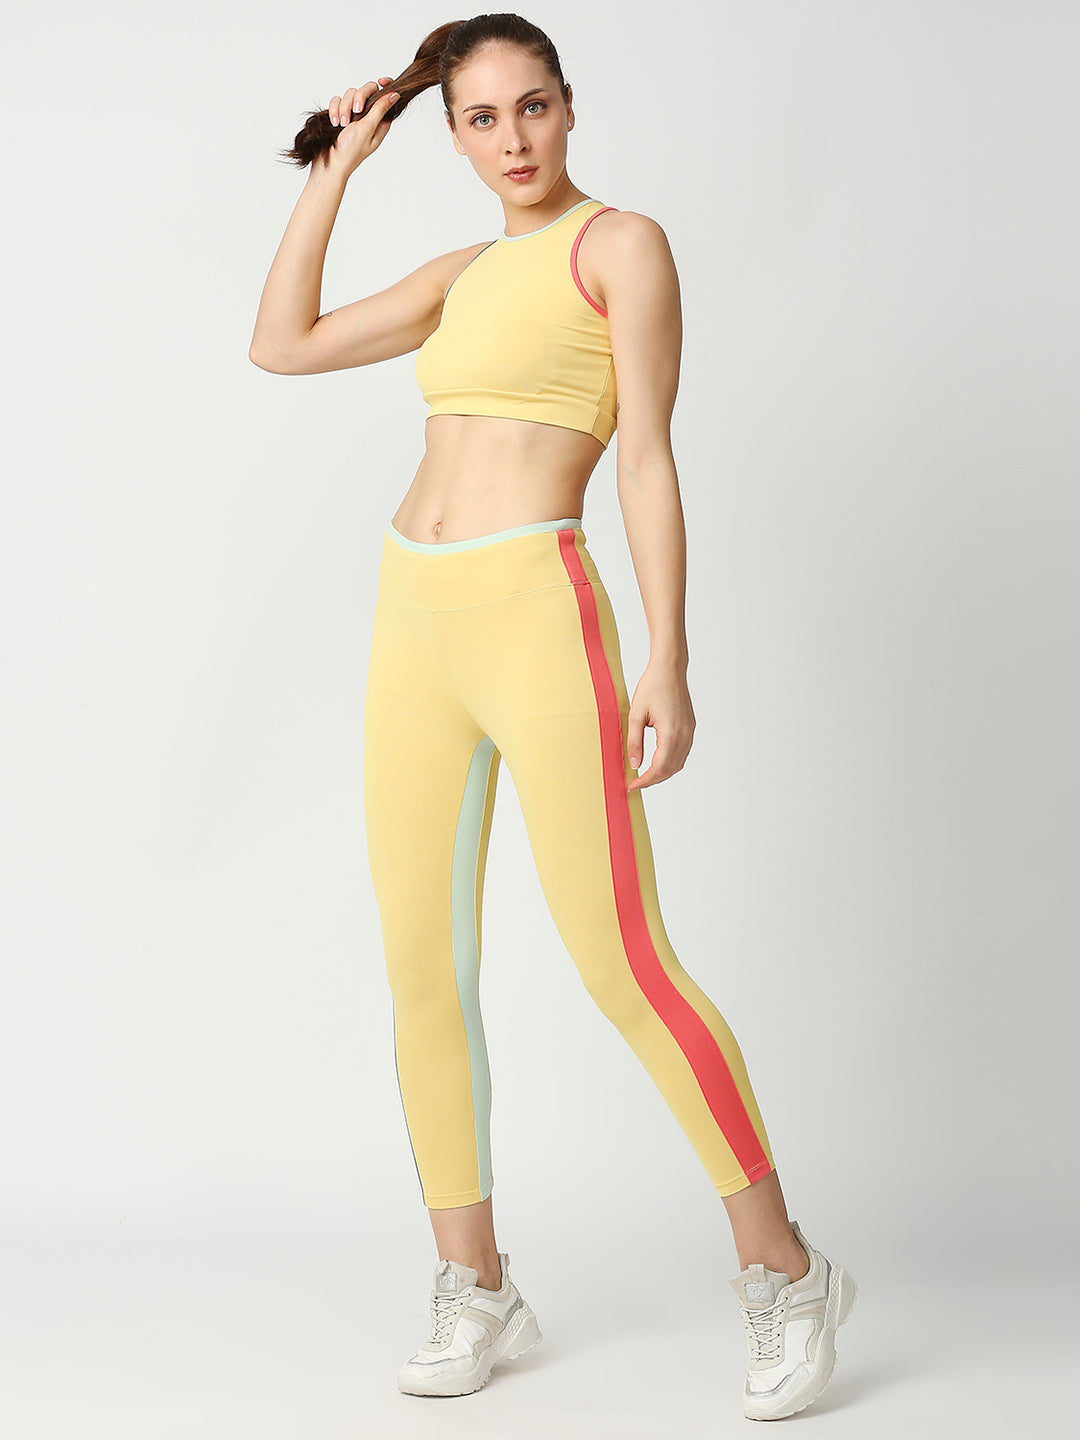 Buy Blamblack Women's Round Neck Lemon Yellow Color GYM Wear Co-Ord's Set